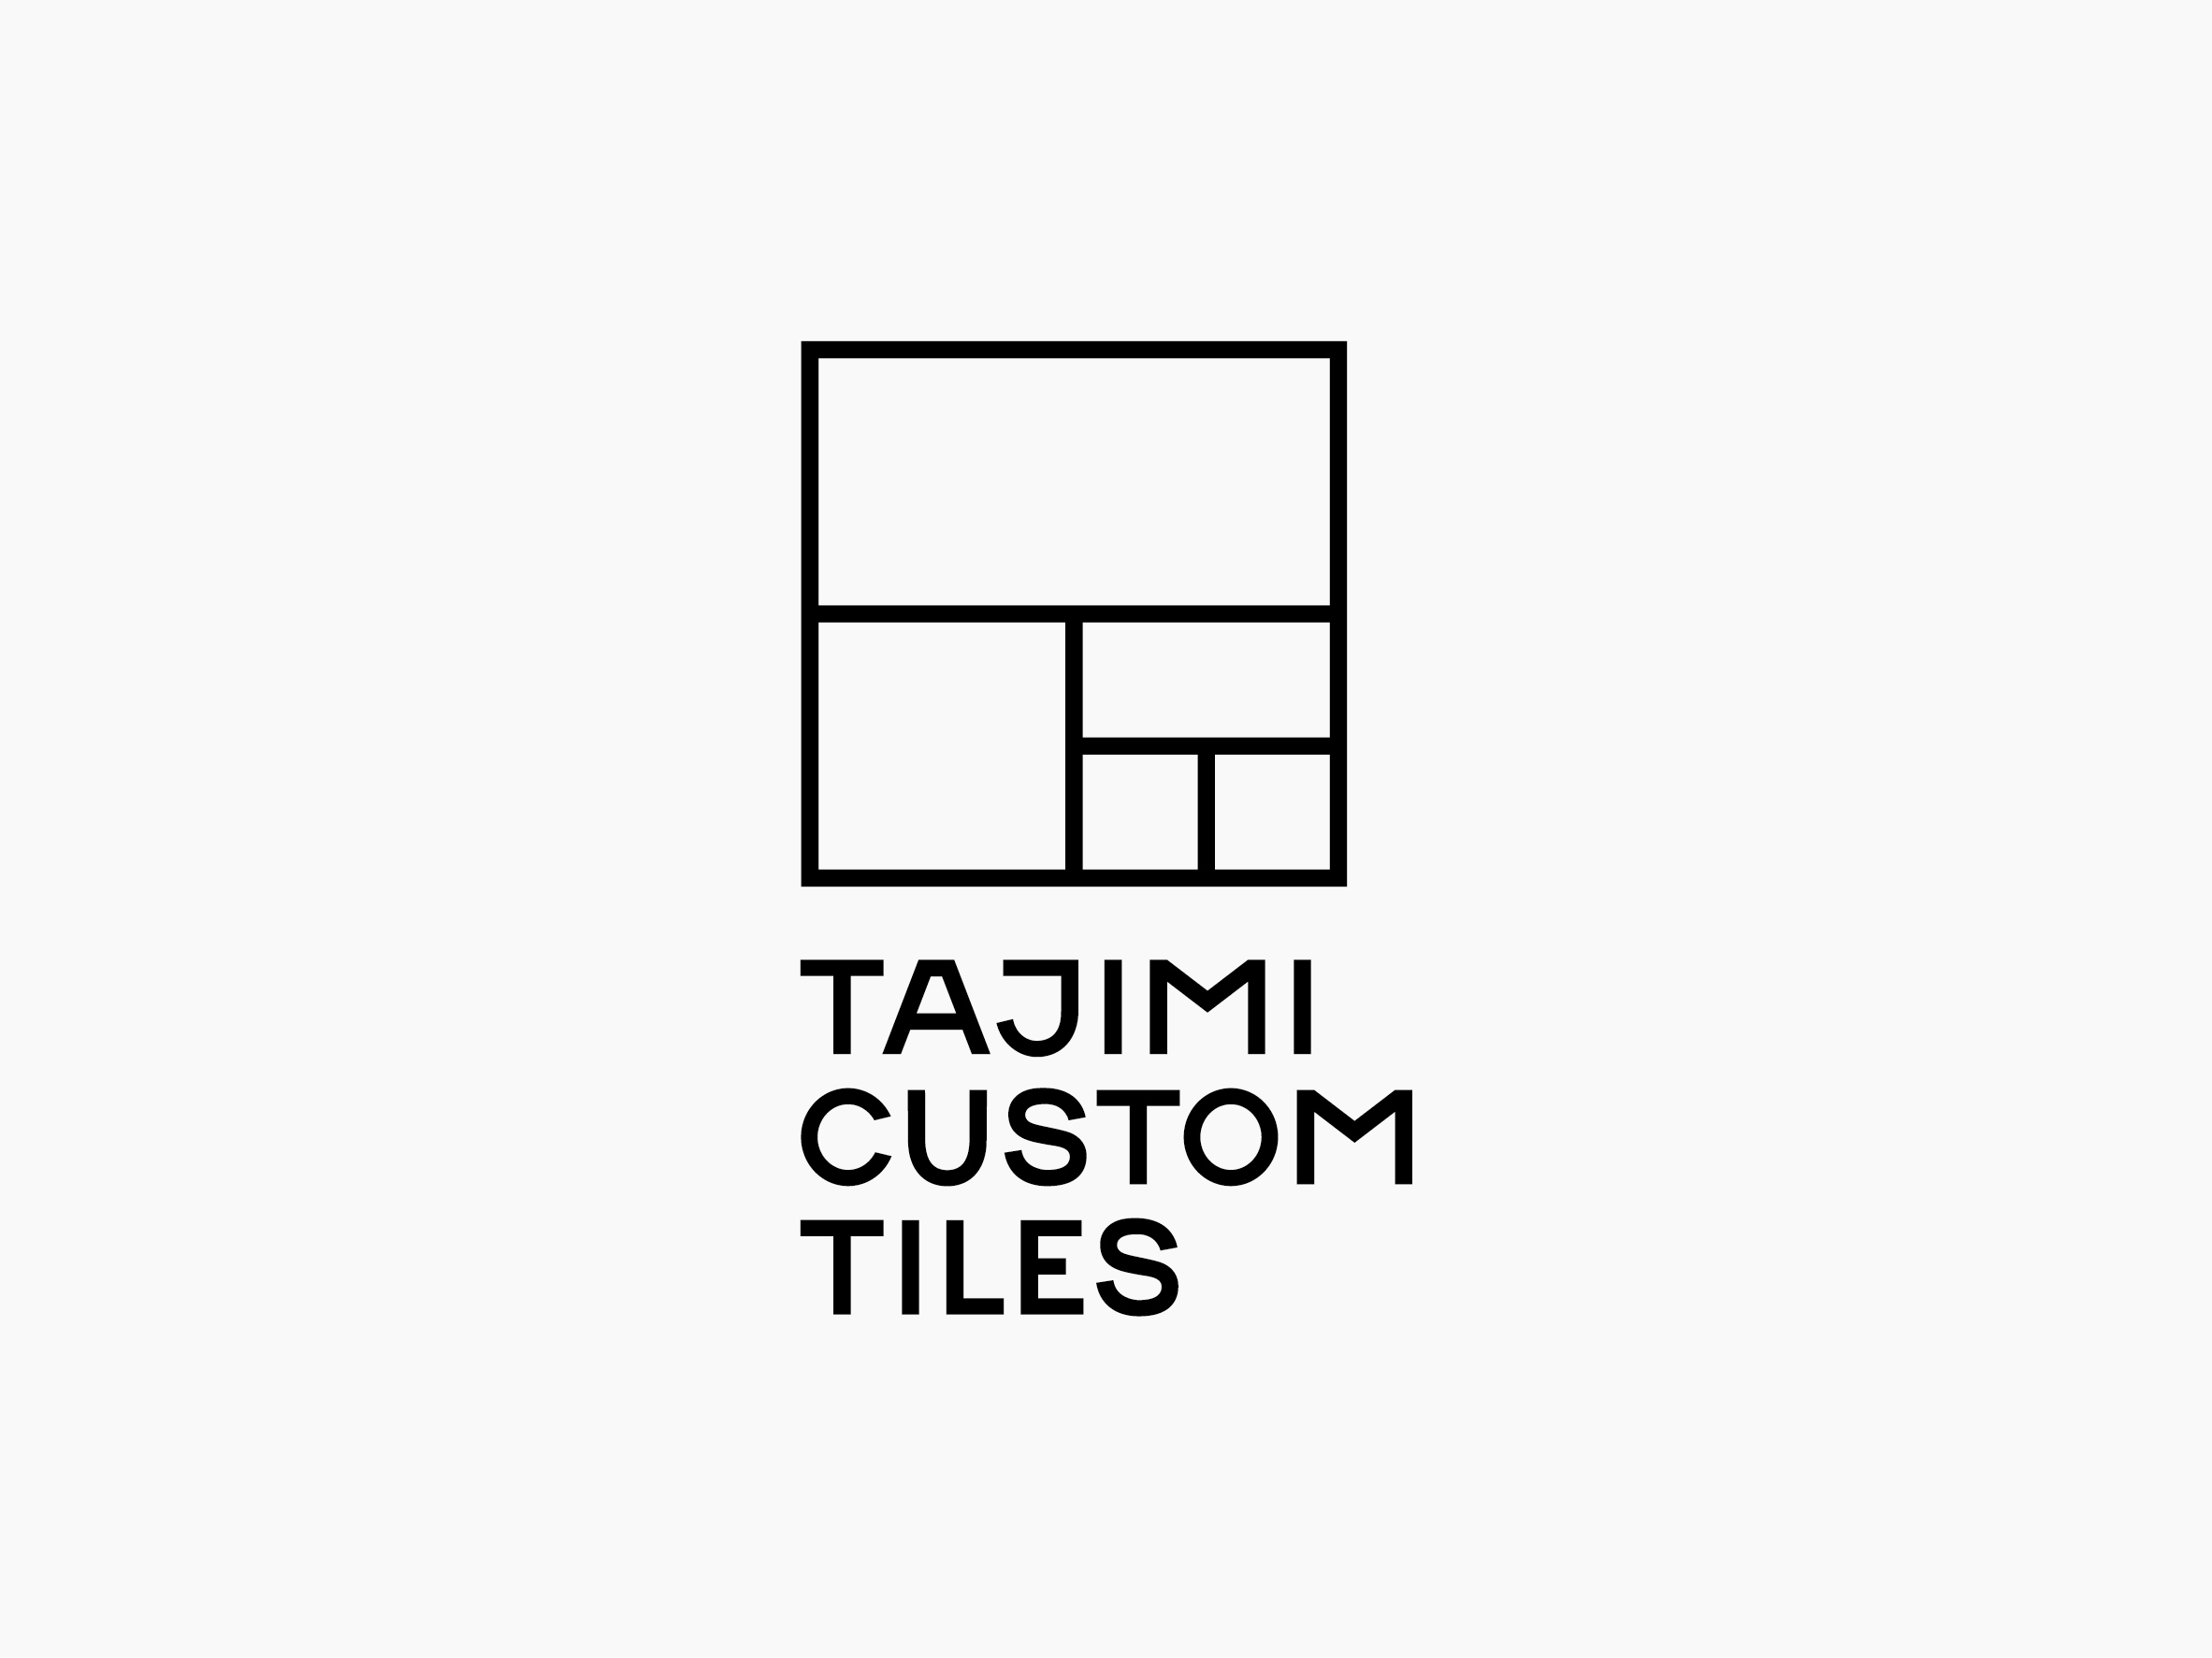 Tajimi Custom Tiles symbol mark and logo type